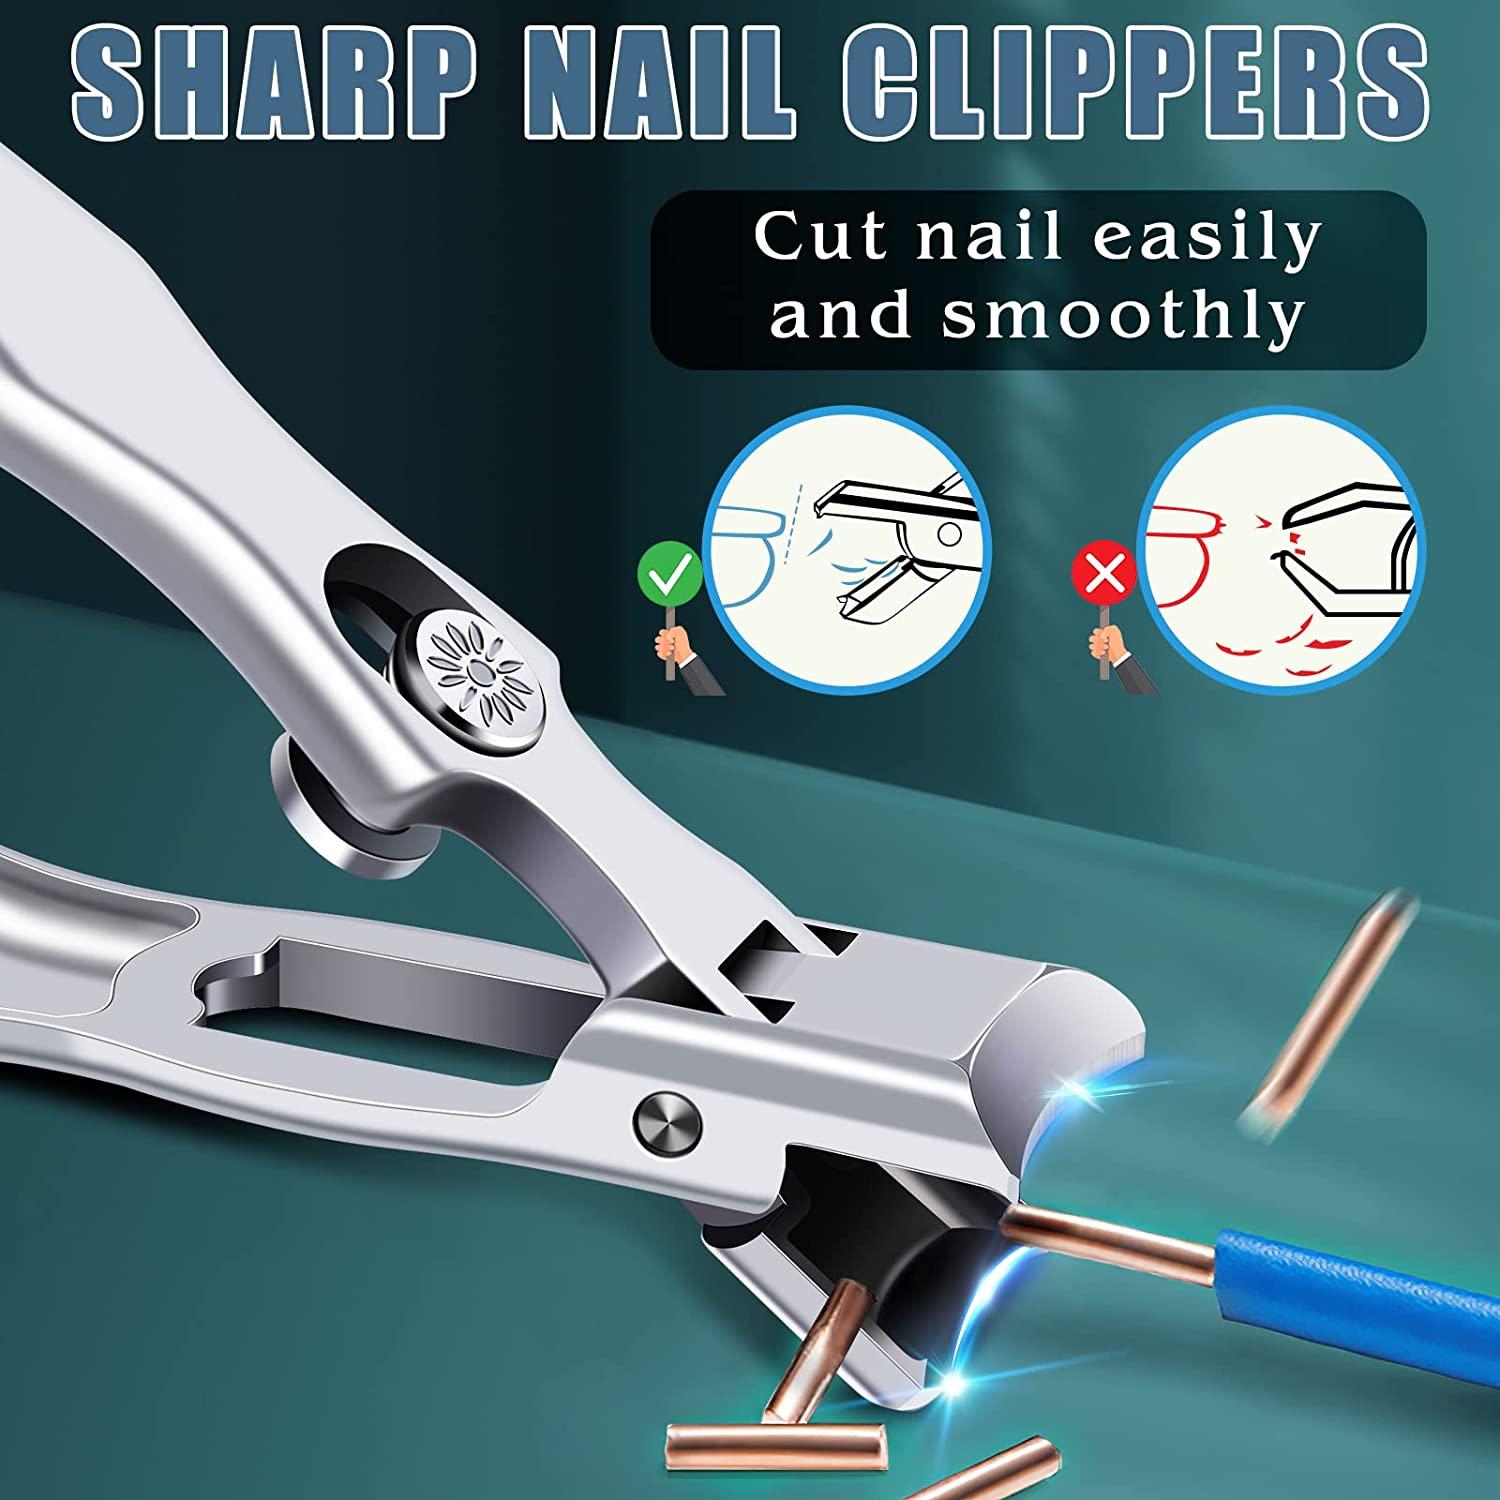 Anti-Splash Hard Nail Clippers Toenails Nippers Nails Cutters